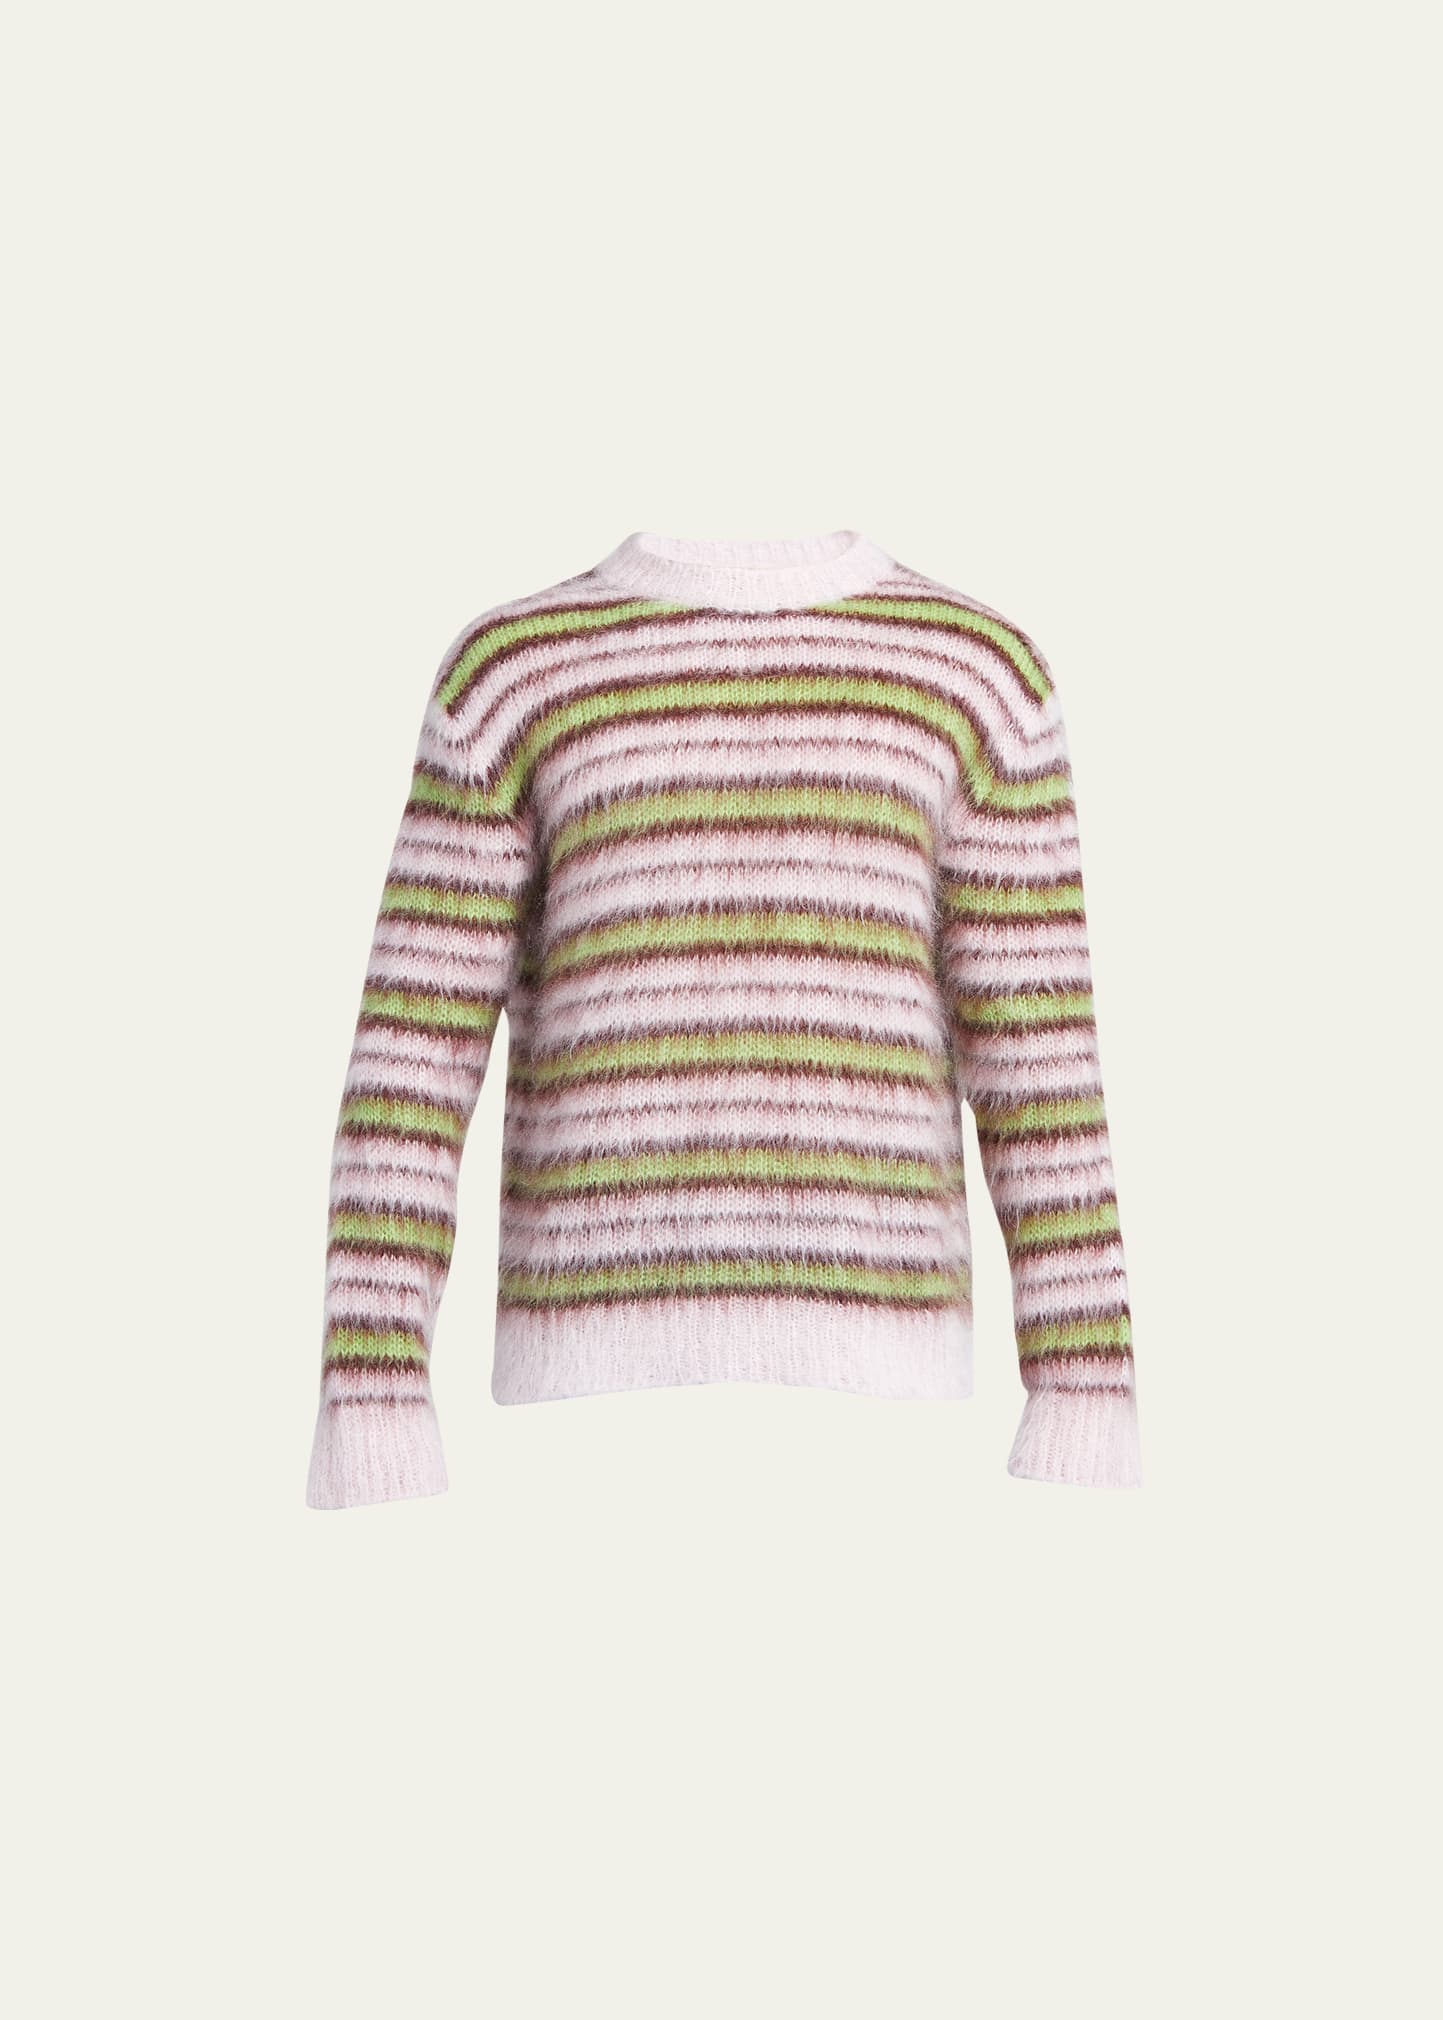 Marni Men's Striped Mohair Sweater